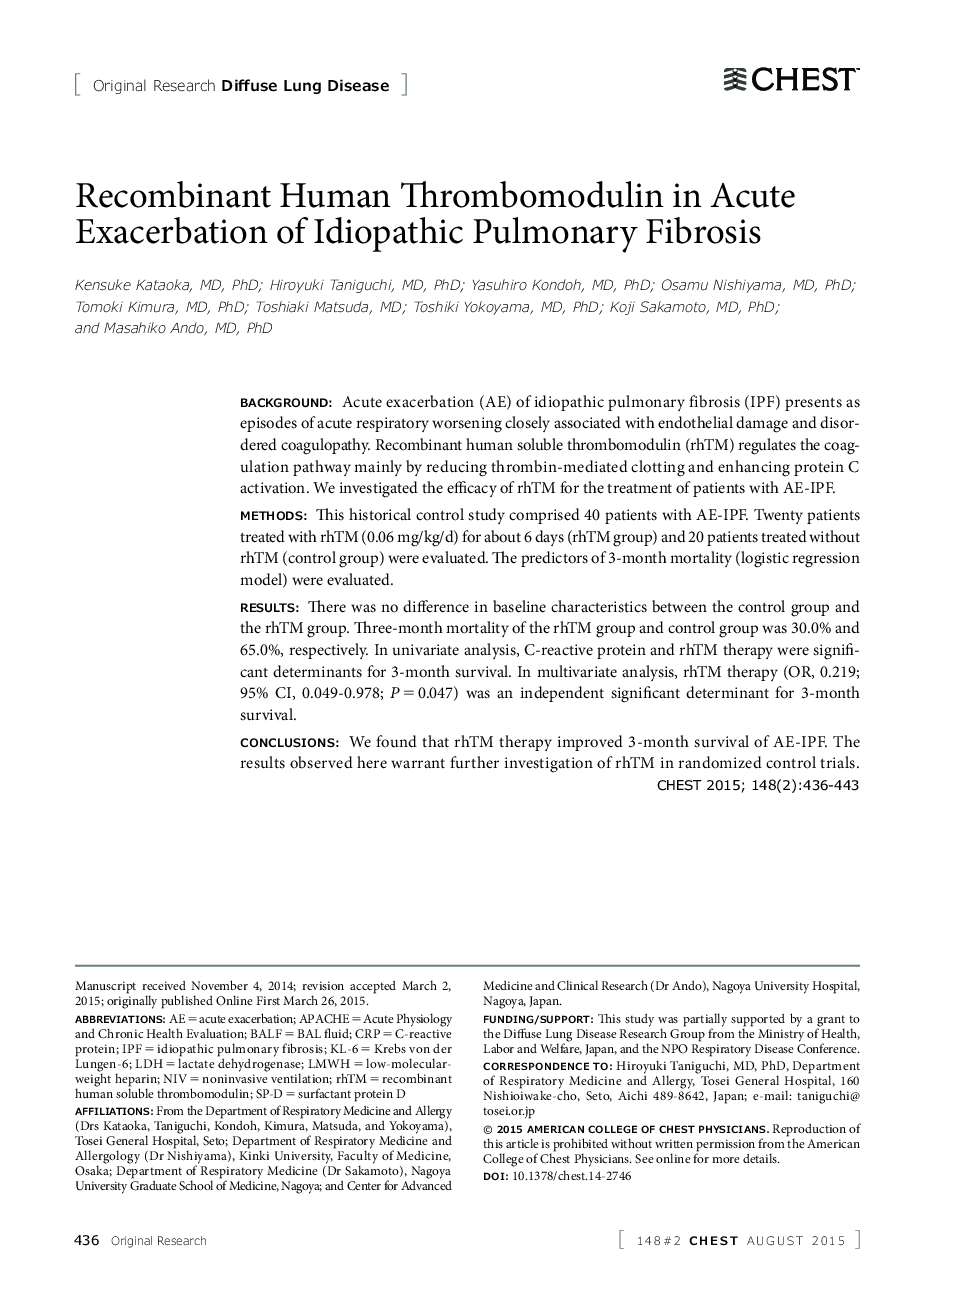 Recombinant Human Thrombomodulin in Acute Exacerbation of Idiopathic Pulmonary Fibrosis